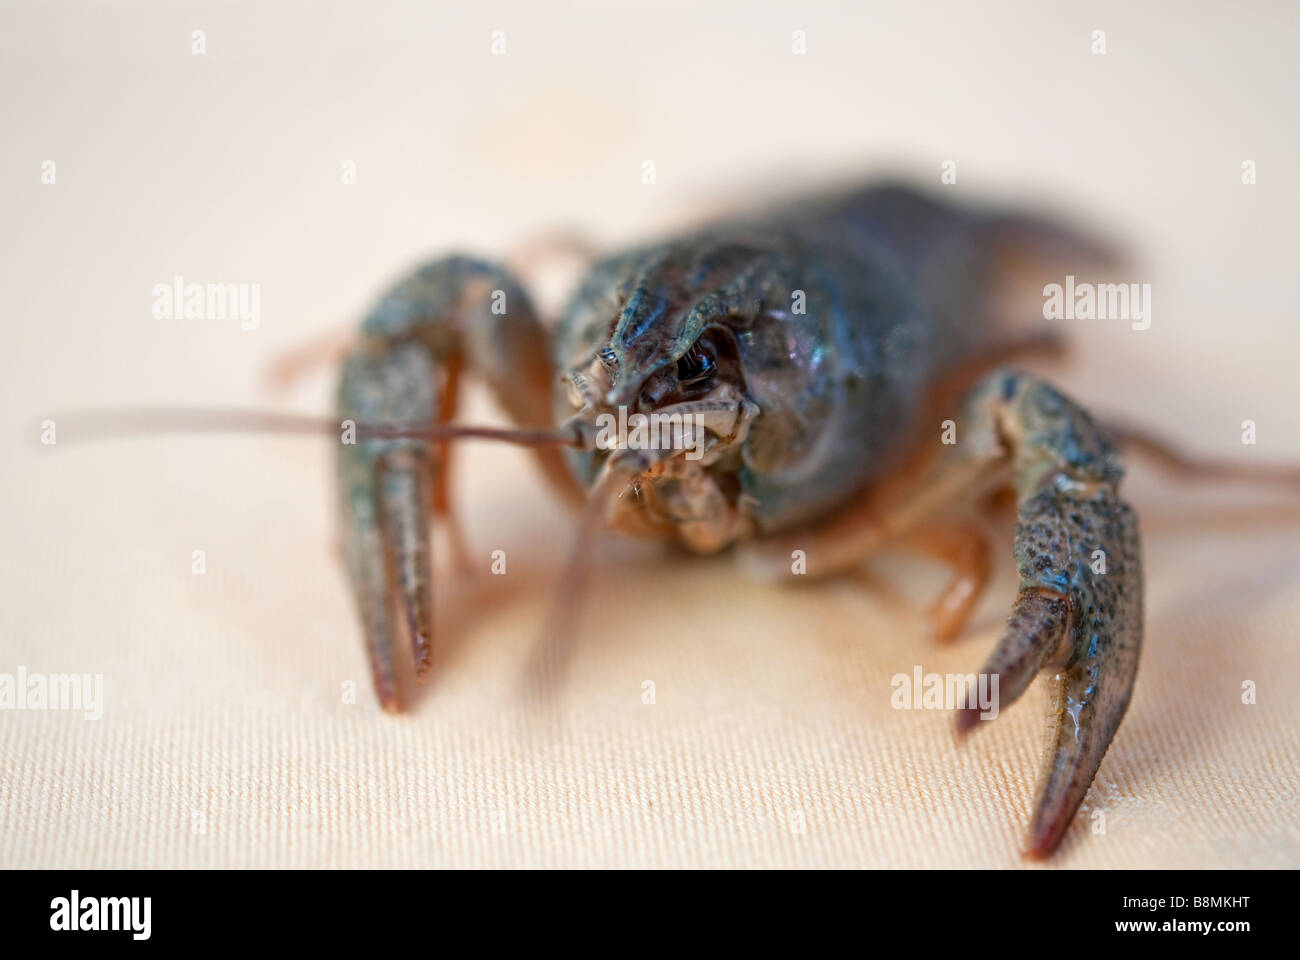 Fresh water crayfish called 'gamberetti del fume' crawling across the restaurnat tablecloth Stock Photo